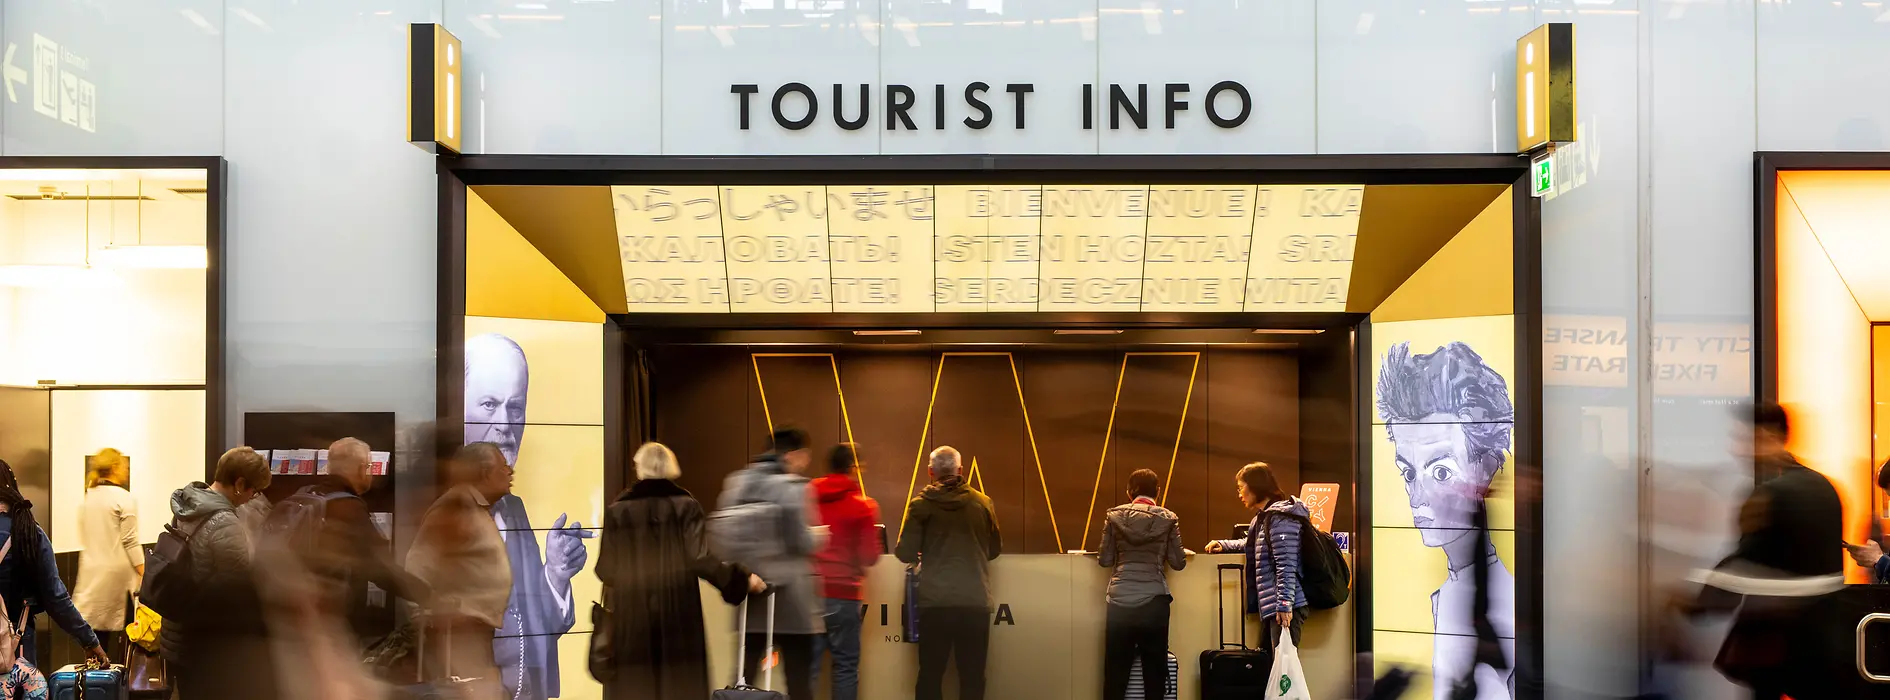 Tourist-Info, Welcome Point a bécsi repülőtéren, utasok